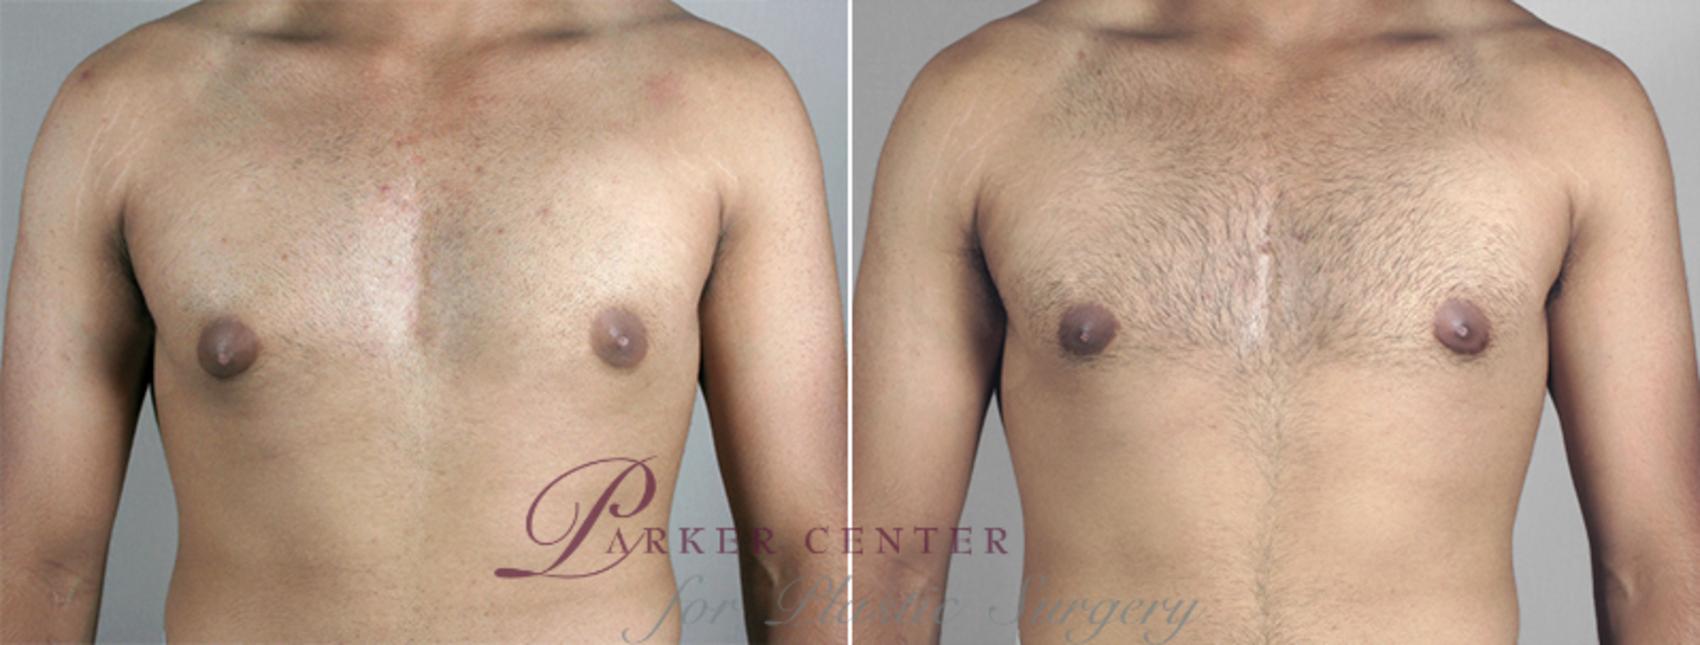 Gynecomastia Surgery Case 625 Before & After View #1 | Paramus, NJ | Parker Center for Plastic Surgery